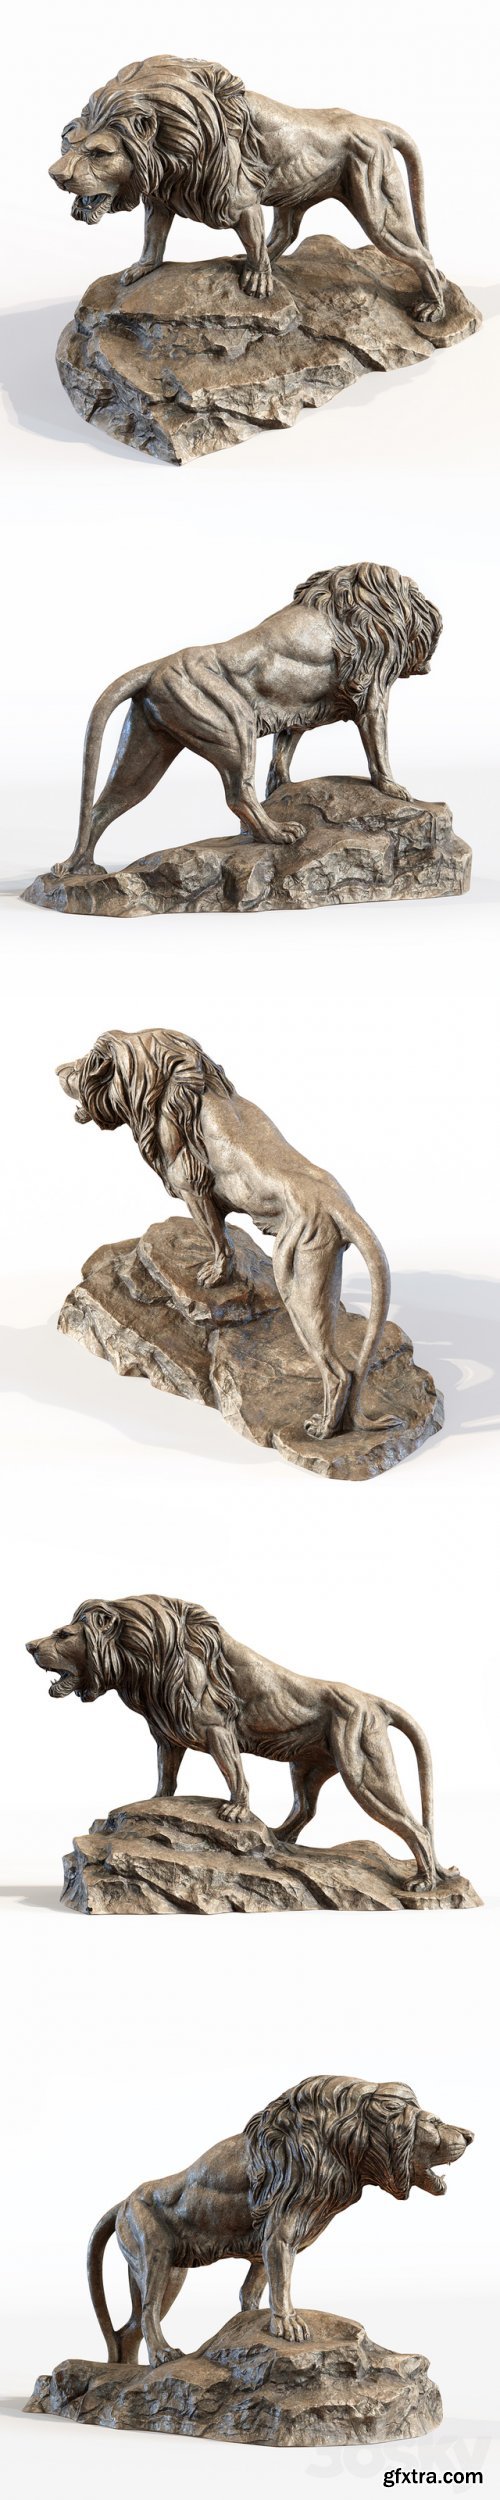 Sculpture of Leo